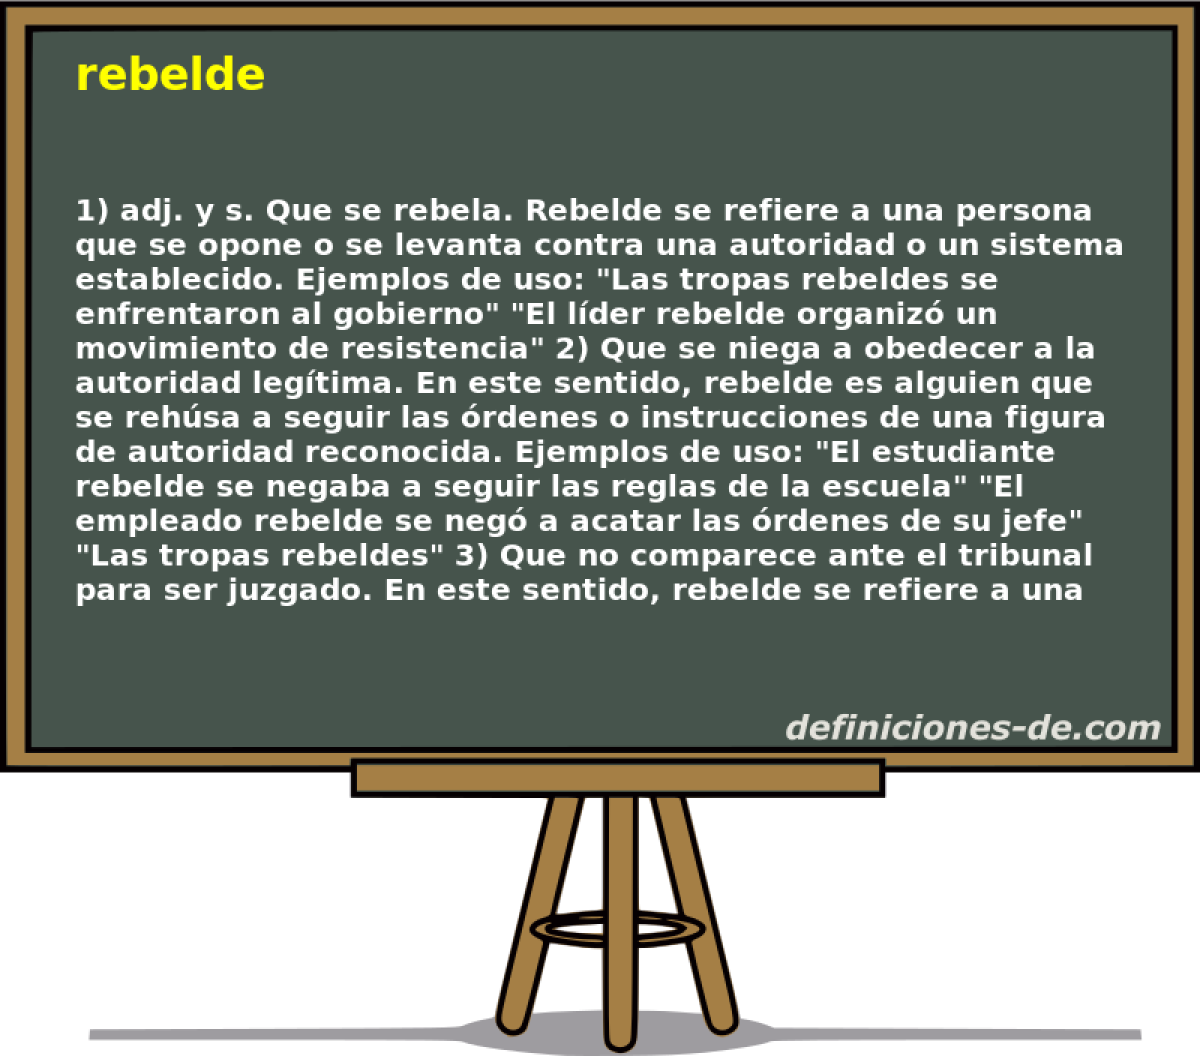 rebelde 